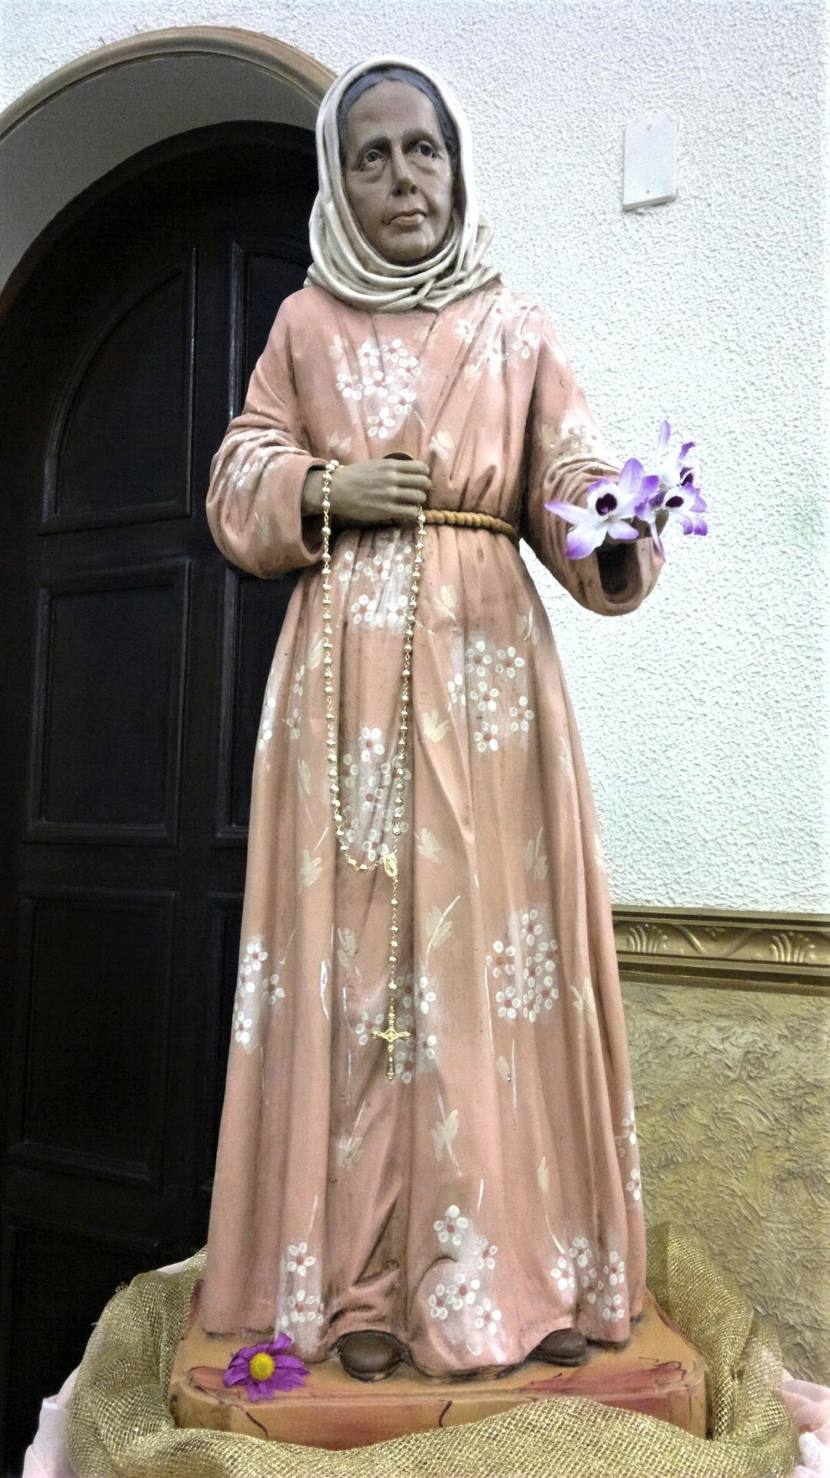 Fête le 14 Juin : Bienheureuse Francisca de Paula de Jesus